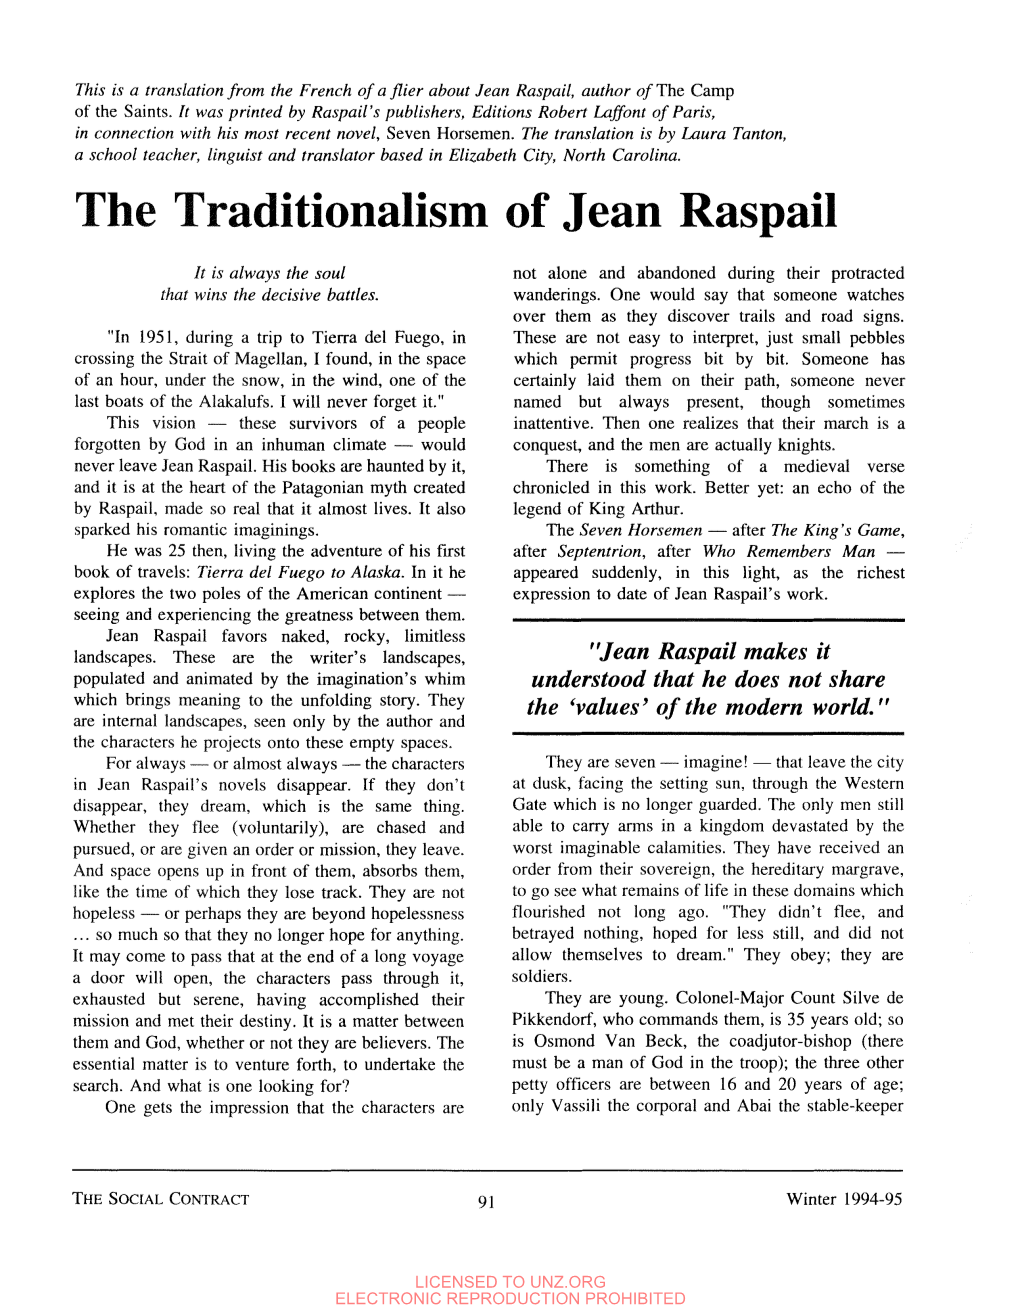 The Traditionalism of Jean Raspail